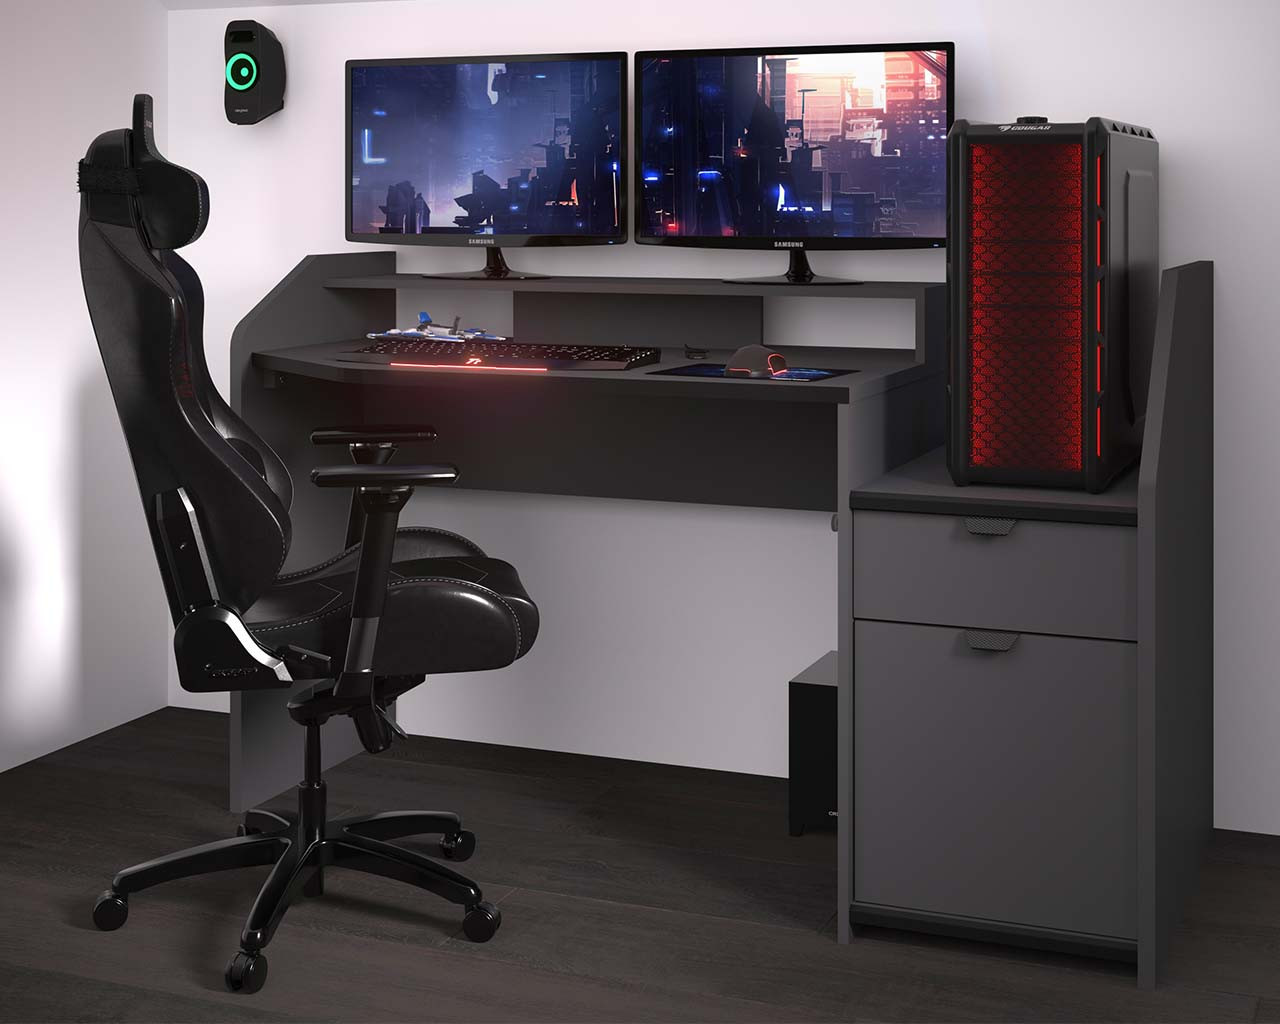 Midi Gaming Set up Desk | Room to Grow